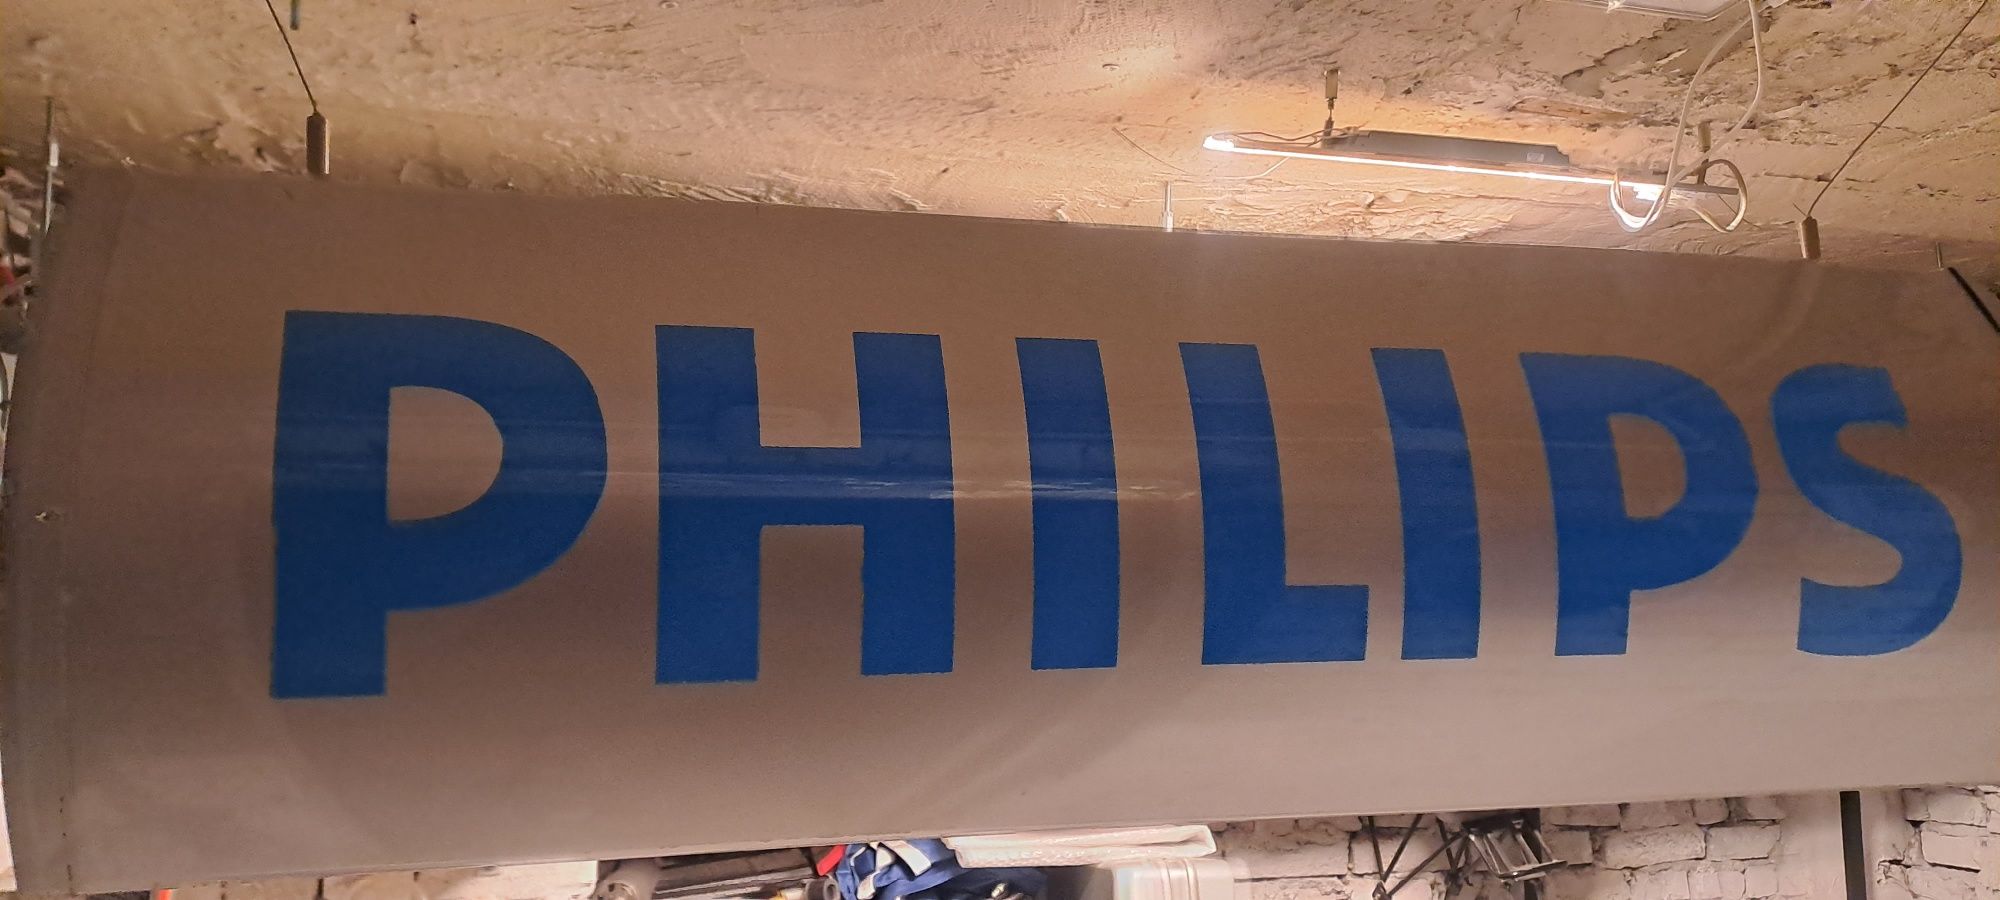 Reklama Philips okazja 100zl